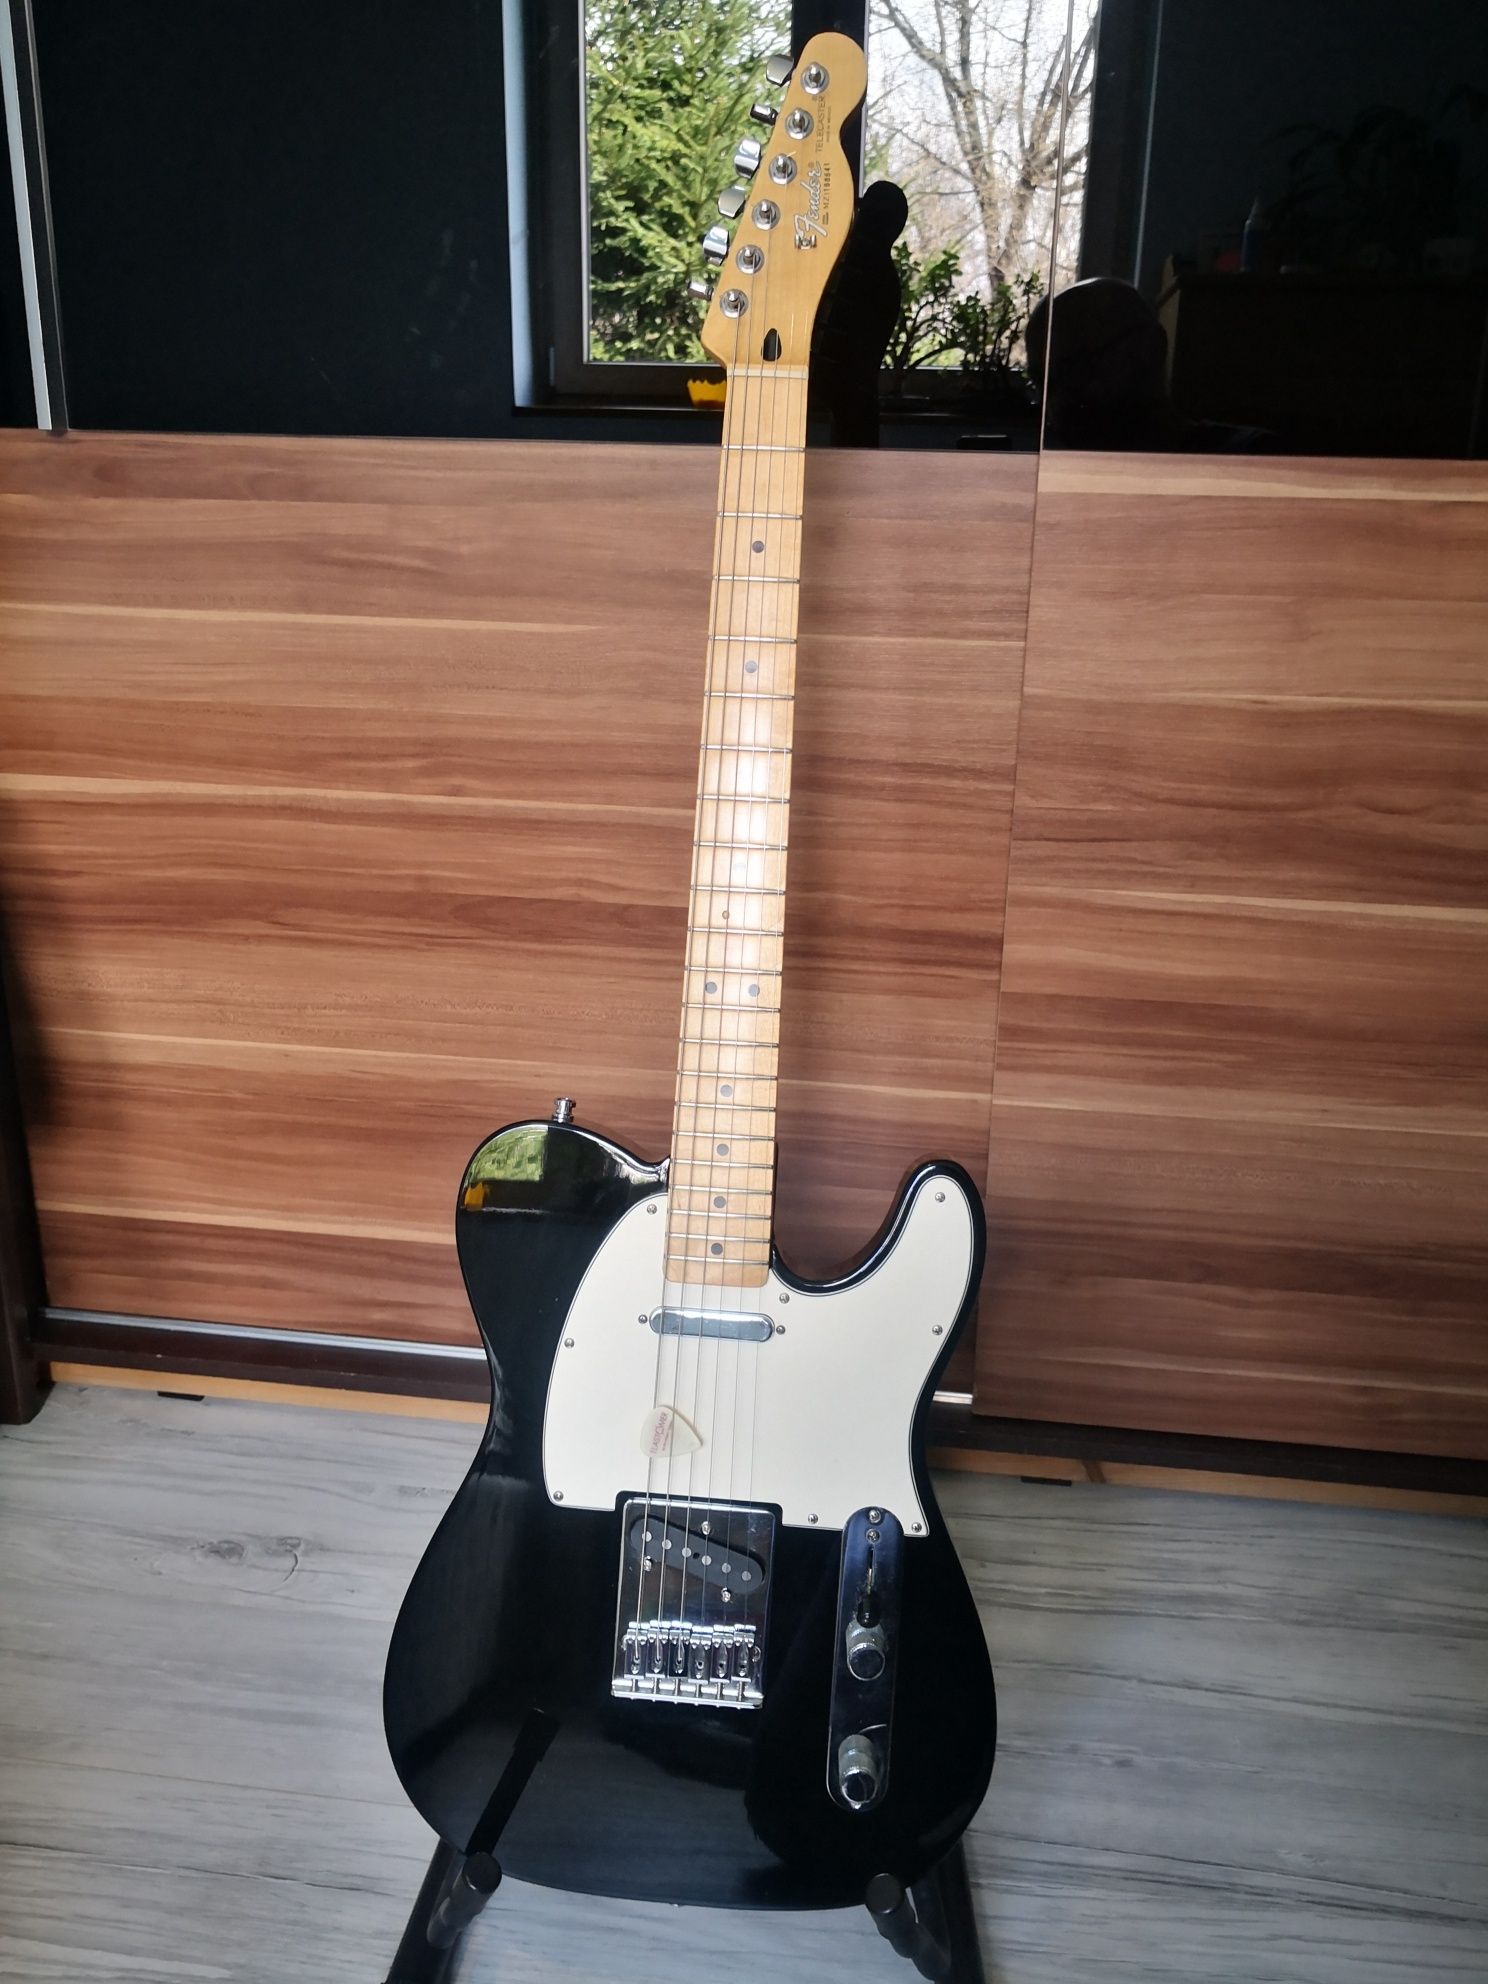 Fender telecaster, MiM 2002